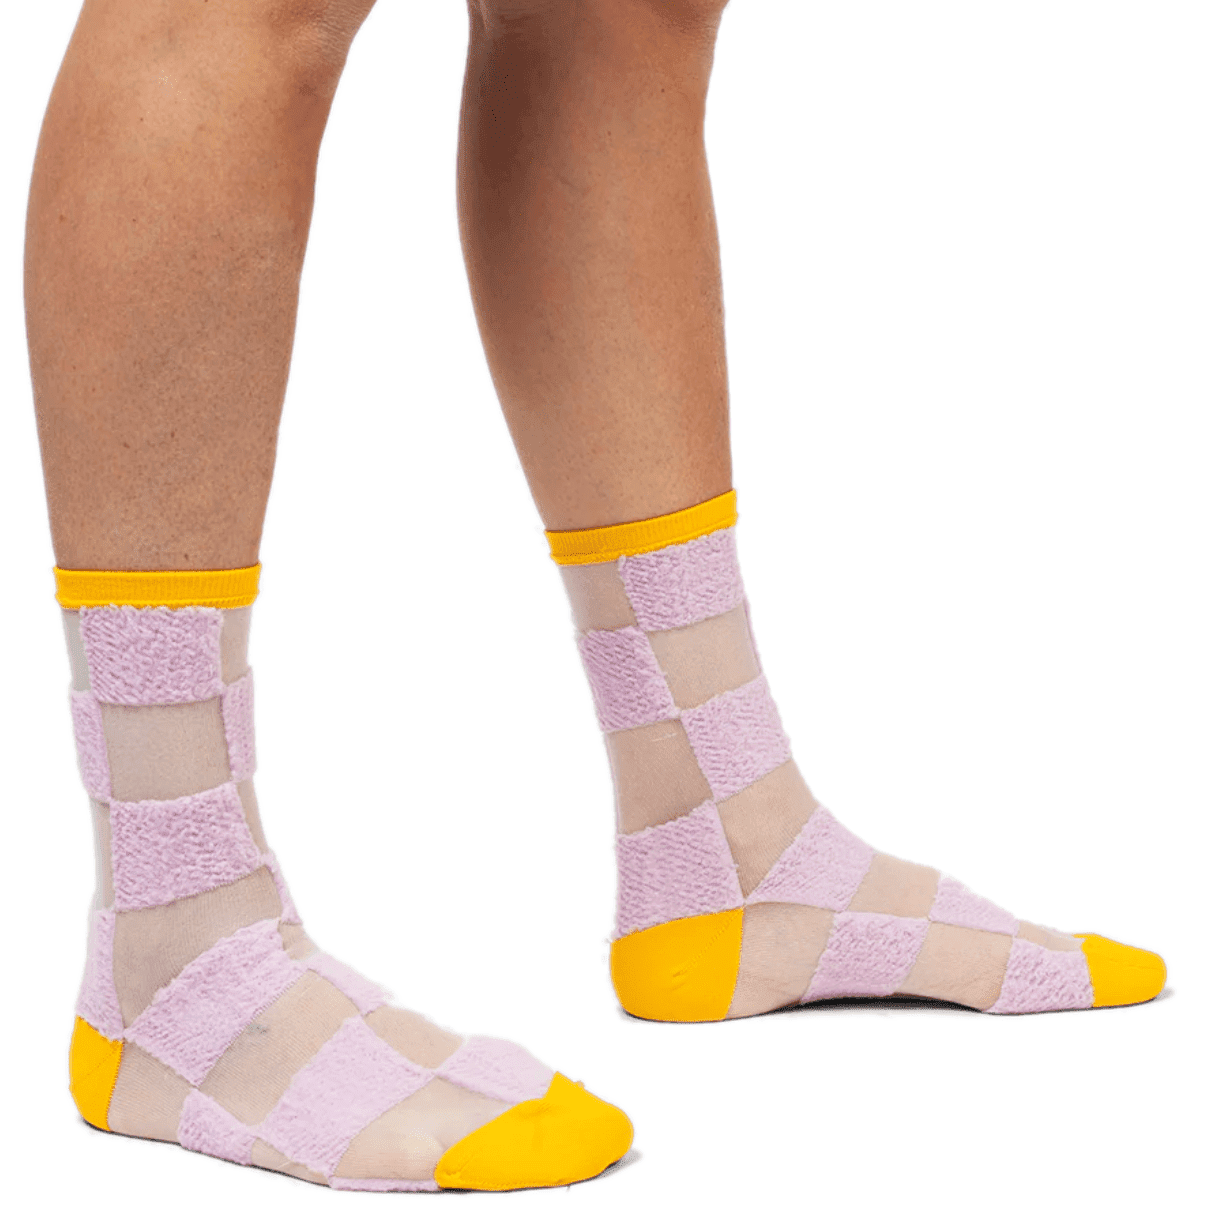 checked semi-transparent socks